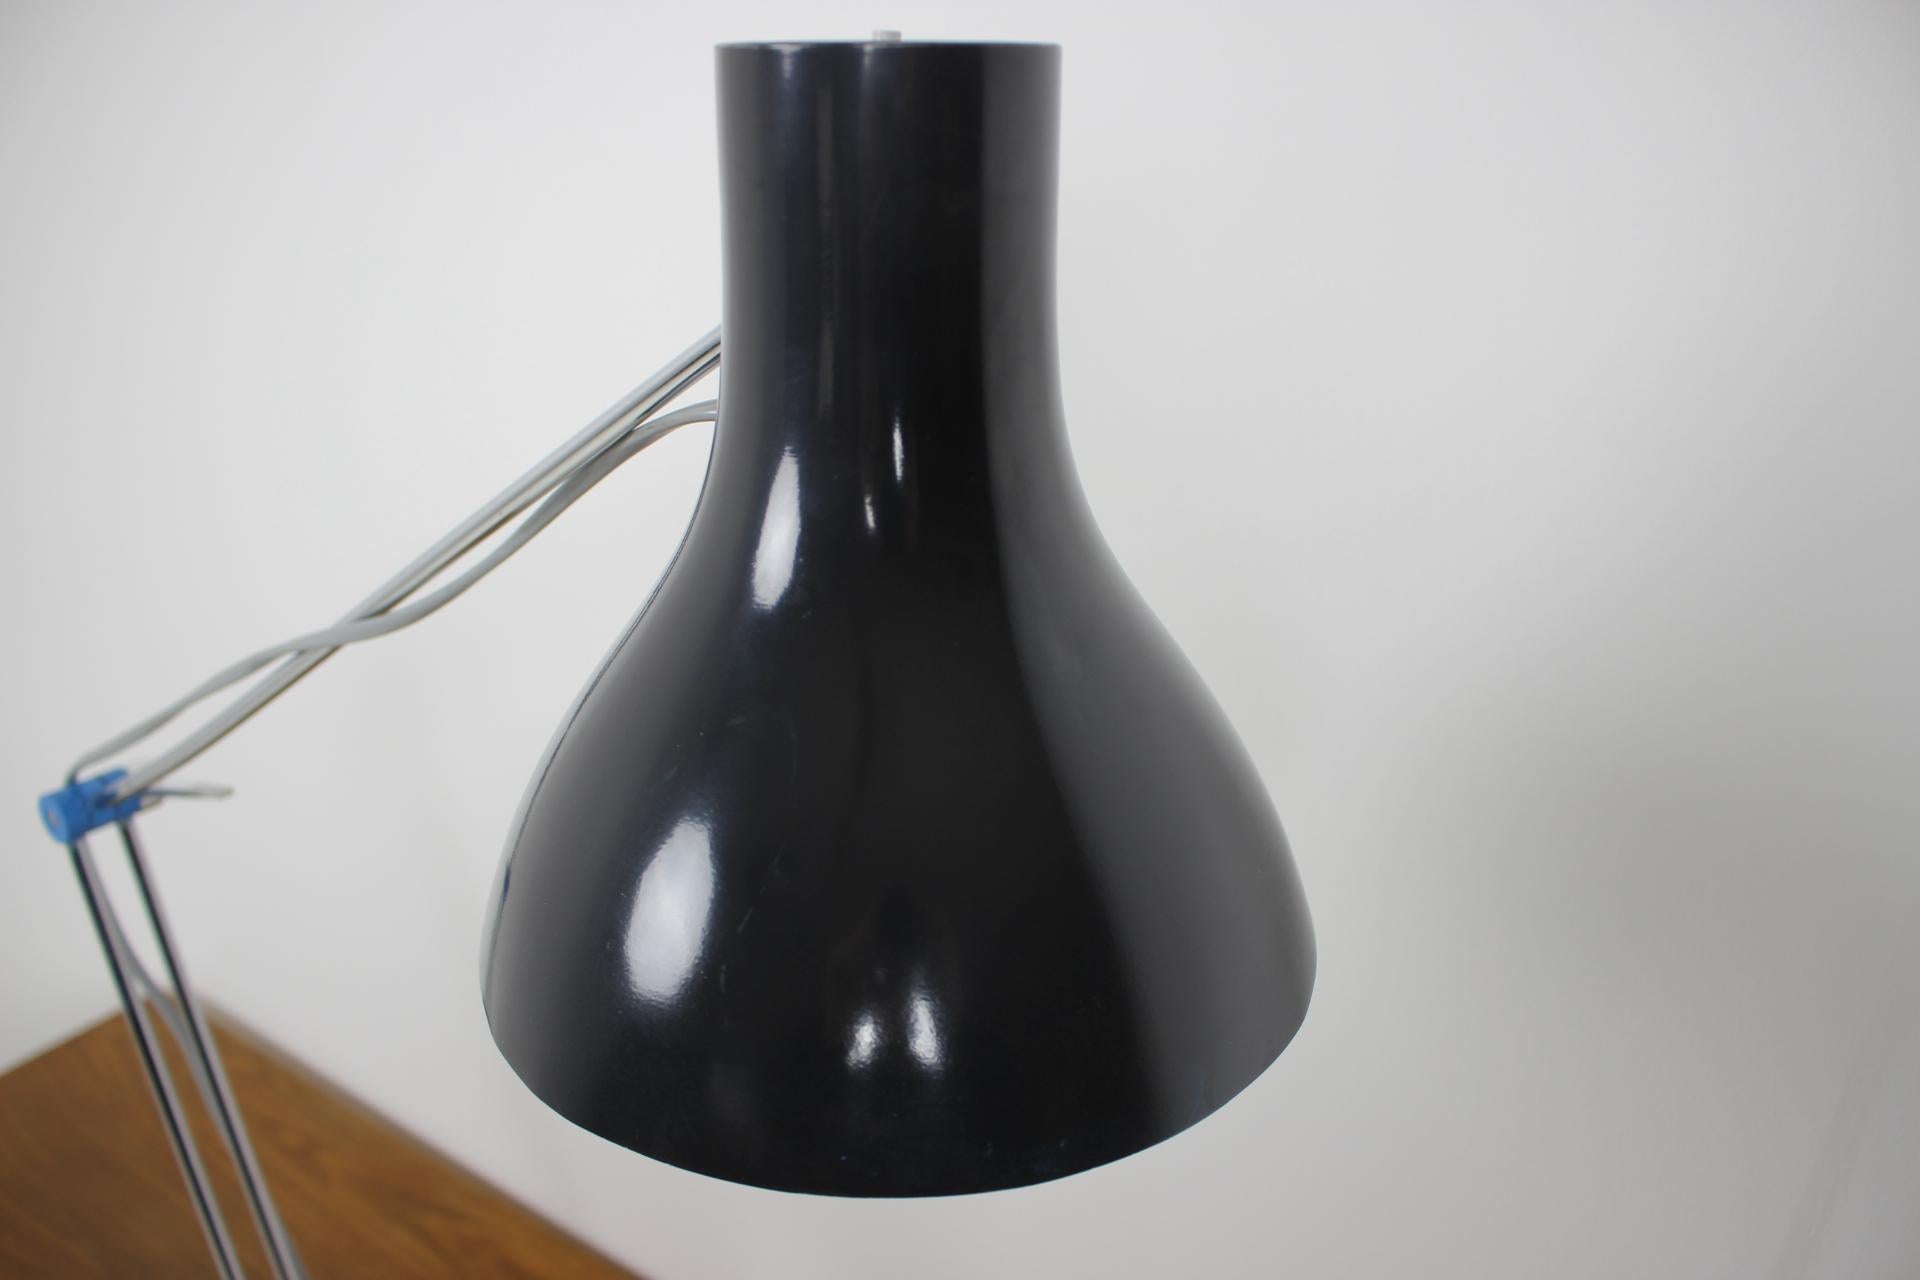 Czech Midcentury Work Adjustable Table Lamp Designed by Josef Hůrka for Napako, 1960 For Sale